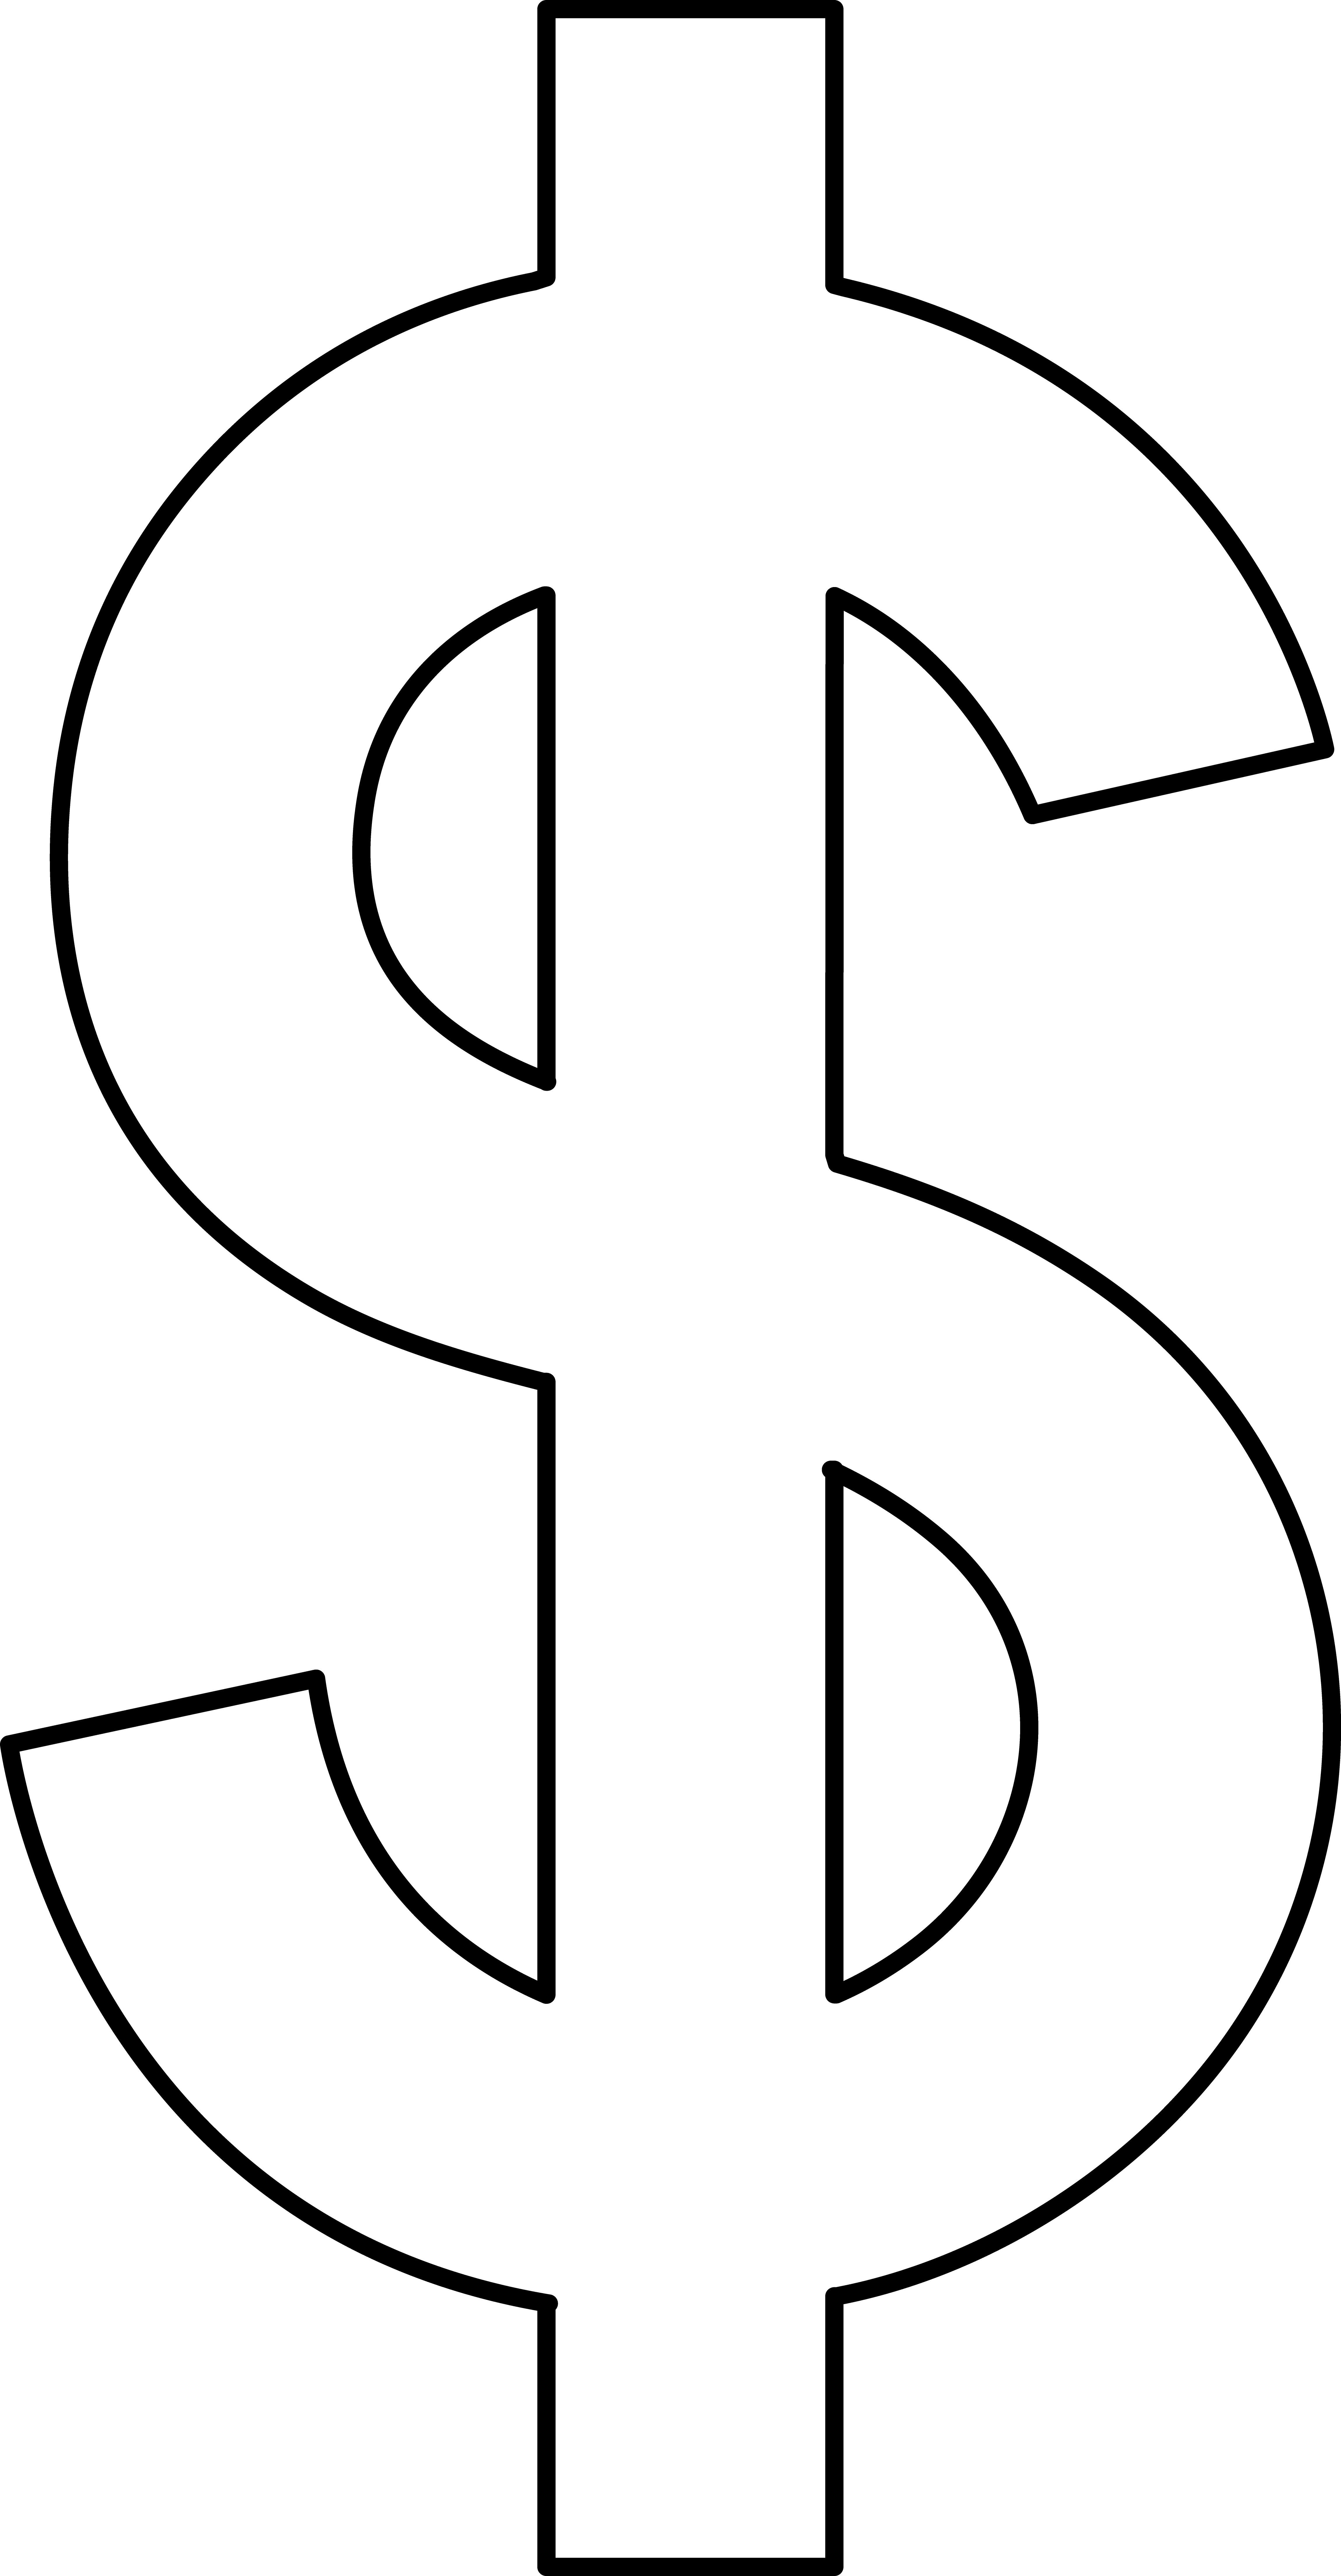 Black Dollar Symbol Images & Pictures - Becuo